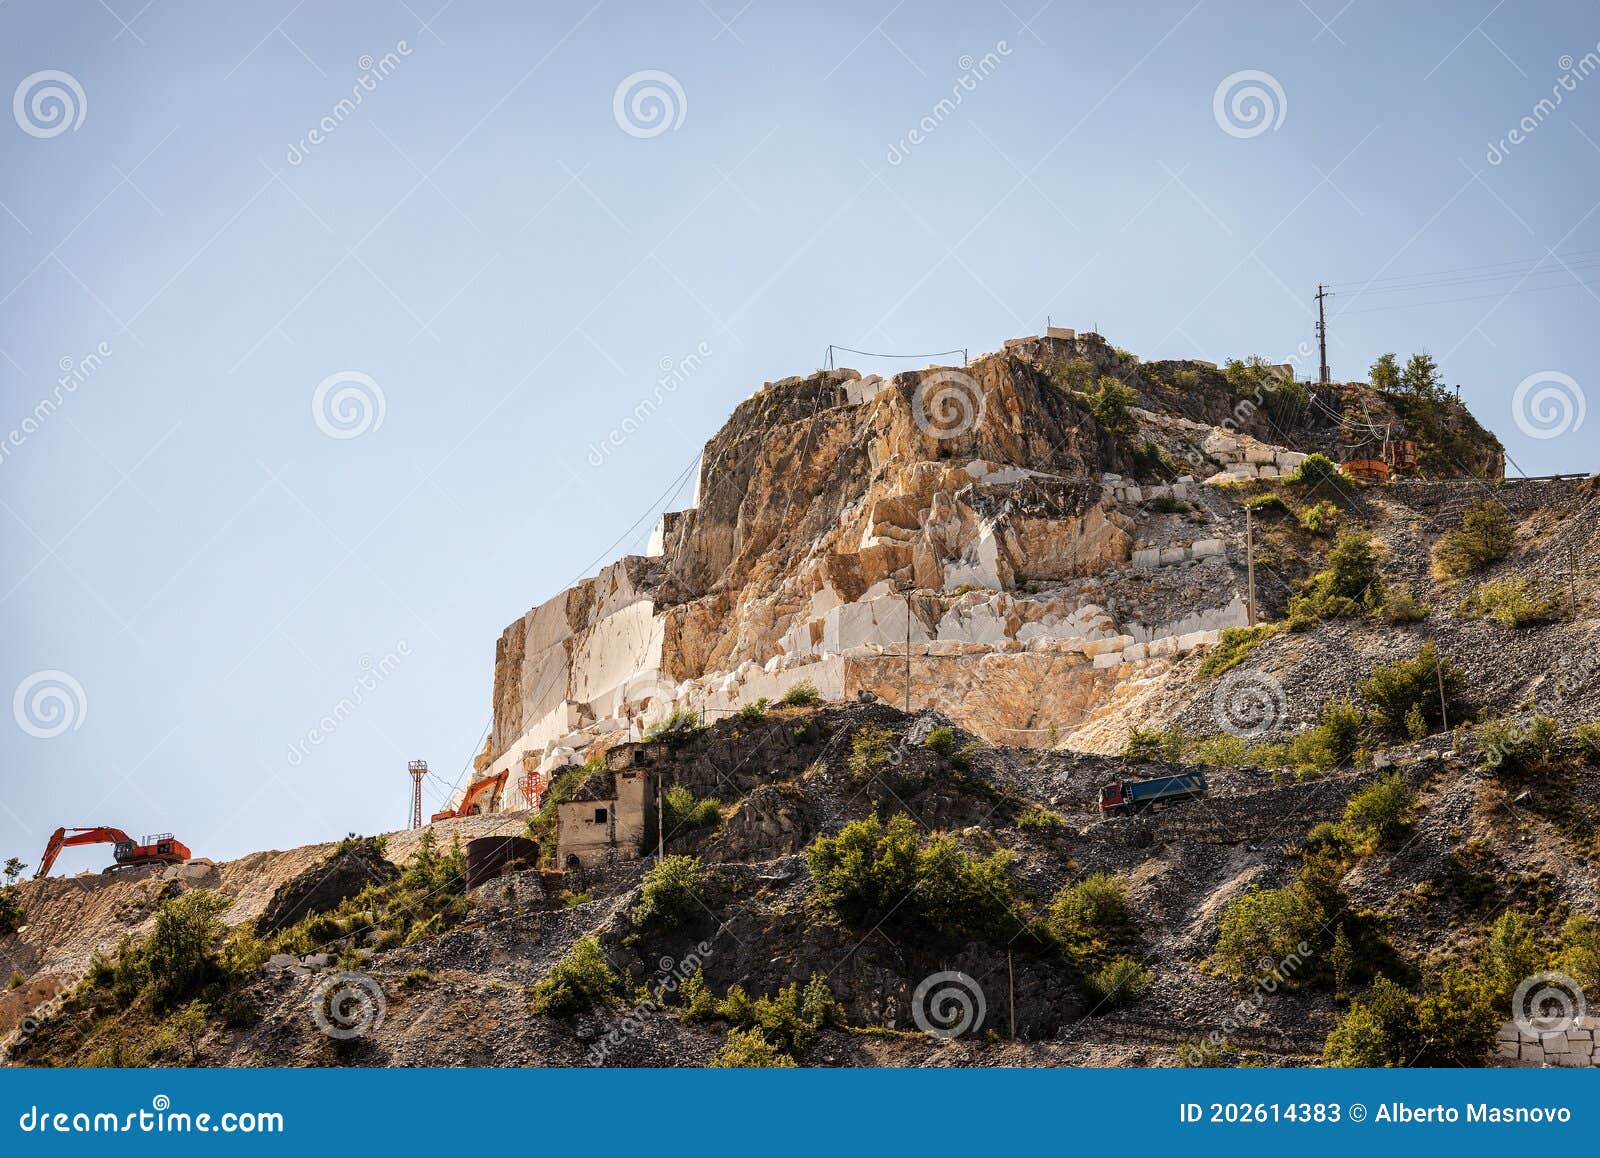 outdoor quarry of white carrara marble - alpi apuane italy